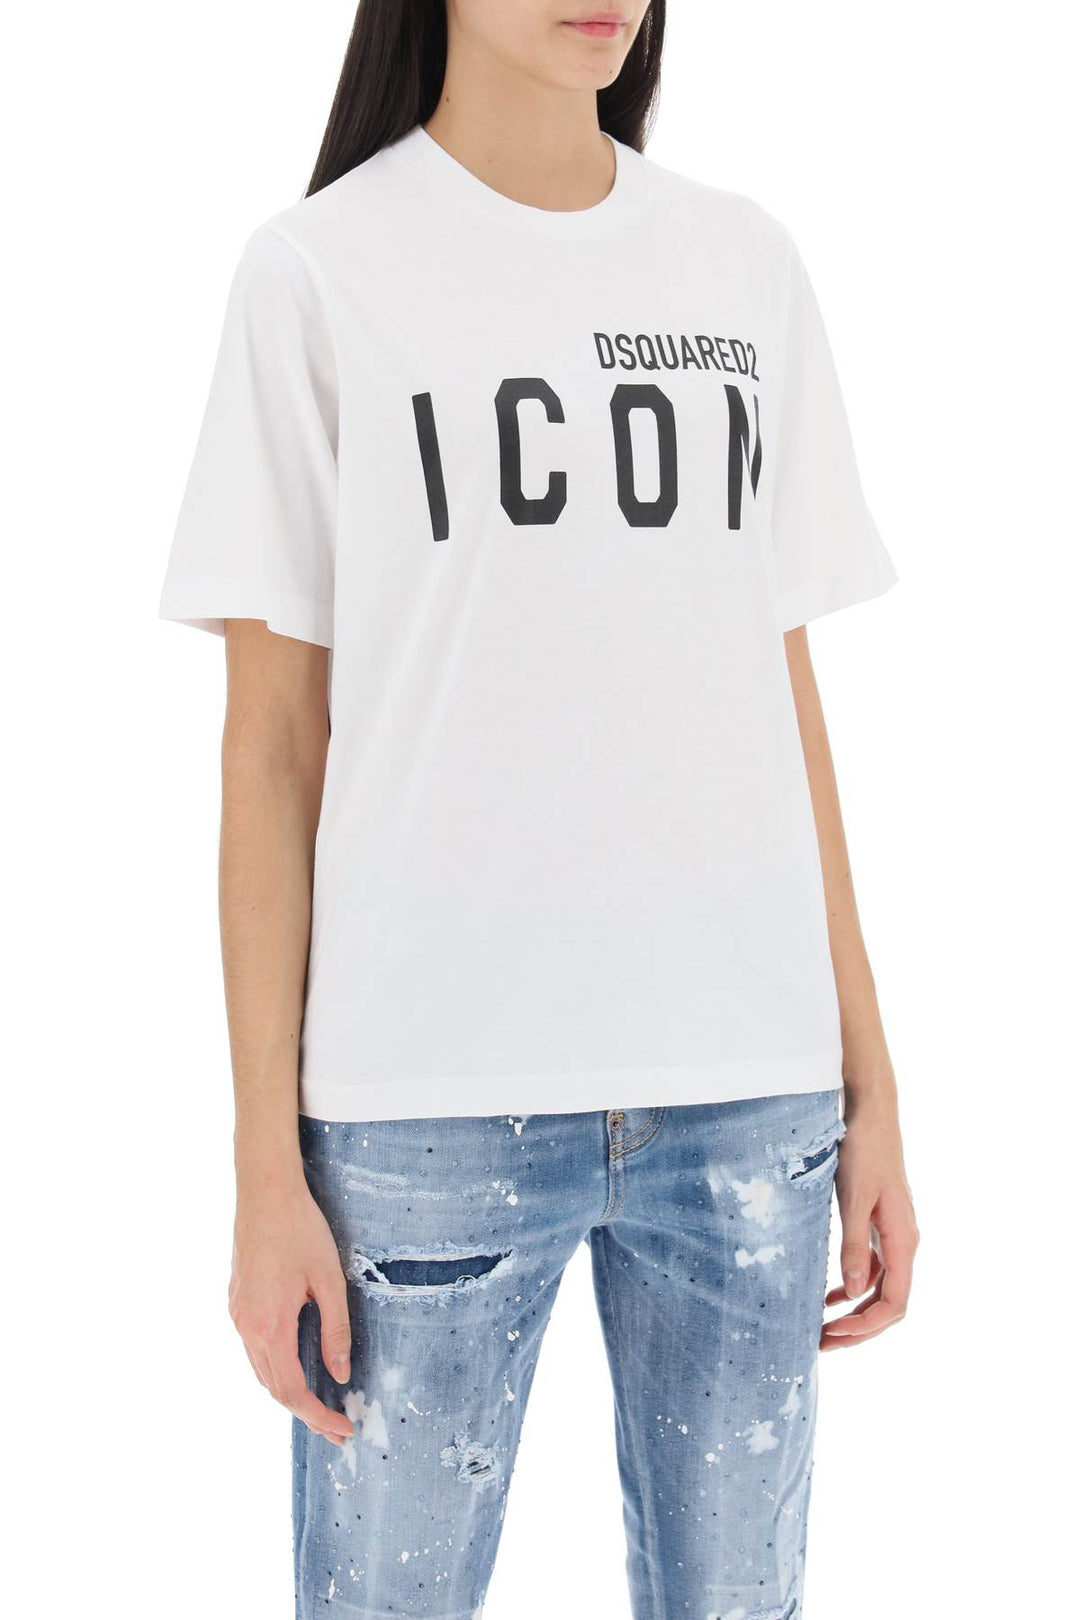 T Shirt Girocollo Icon - Dsquared2 - Donna